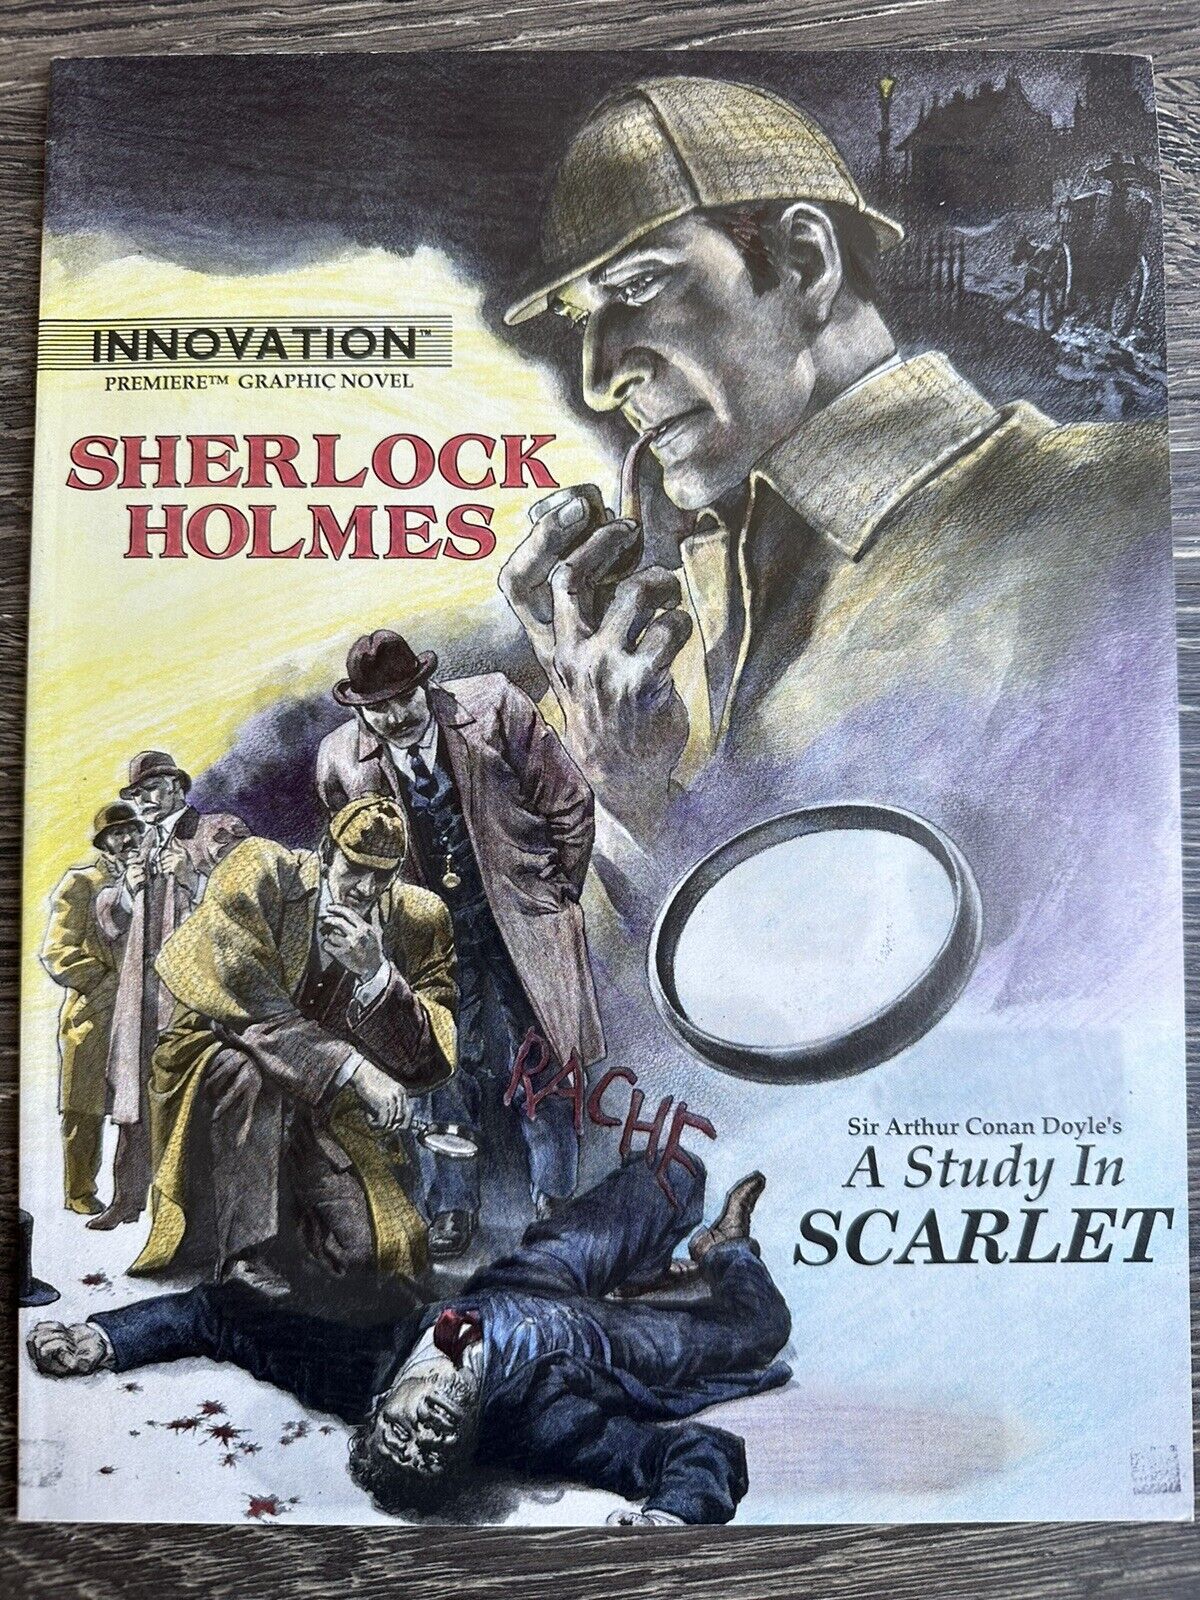 Sherlock Holmes “A Study in Scarlet” Innovation Premier Graphic Novel 1989